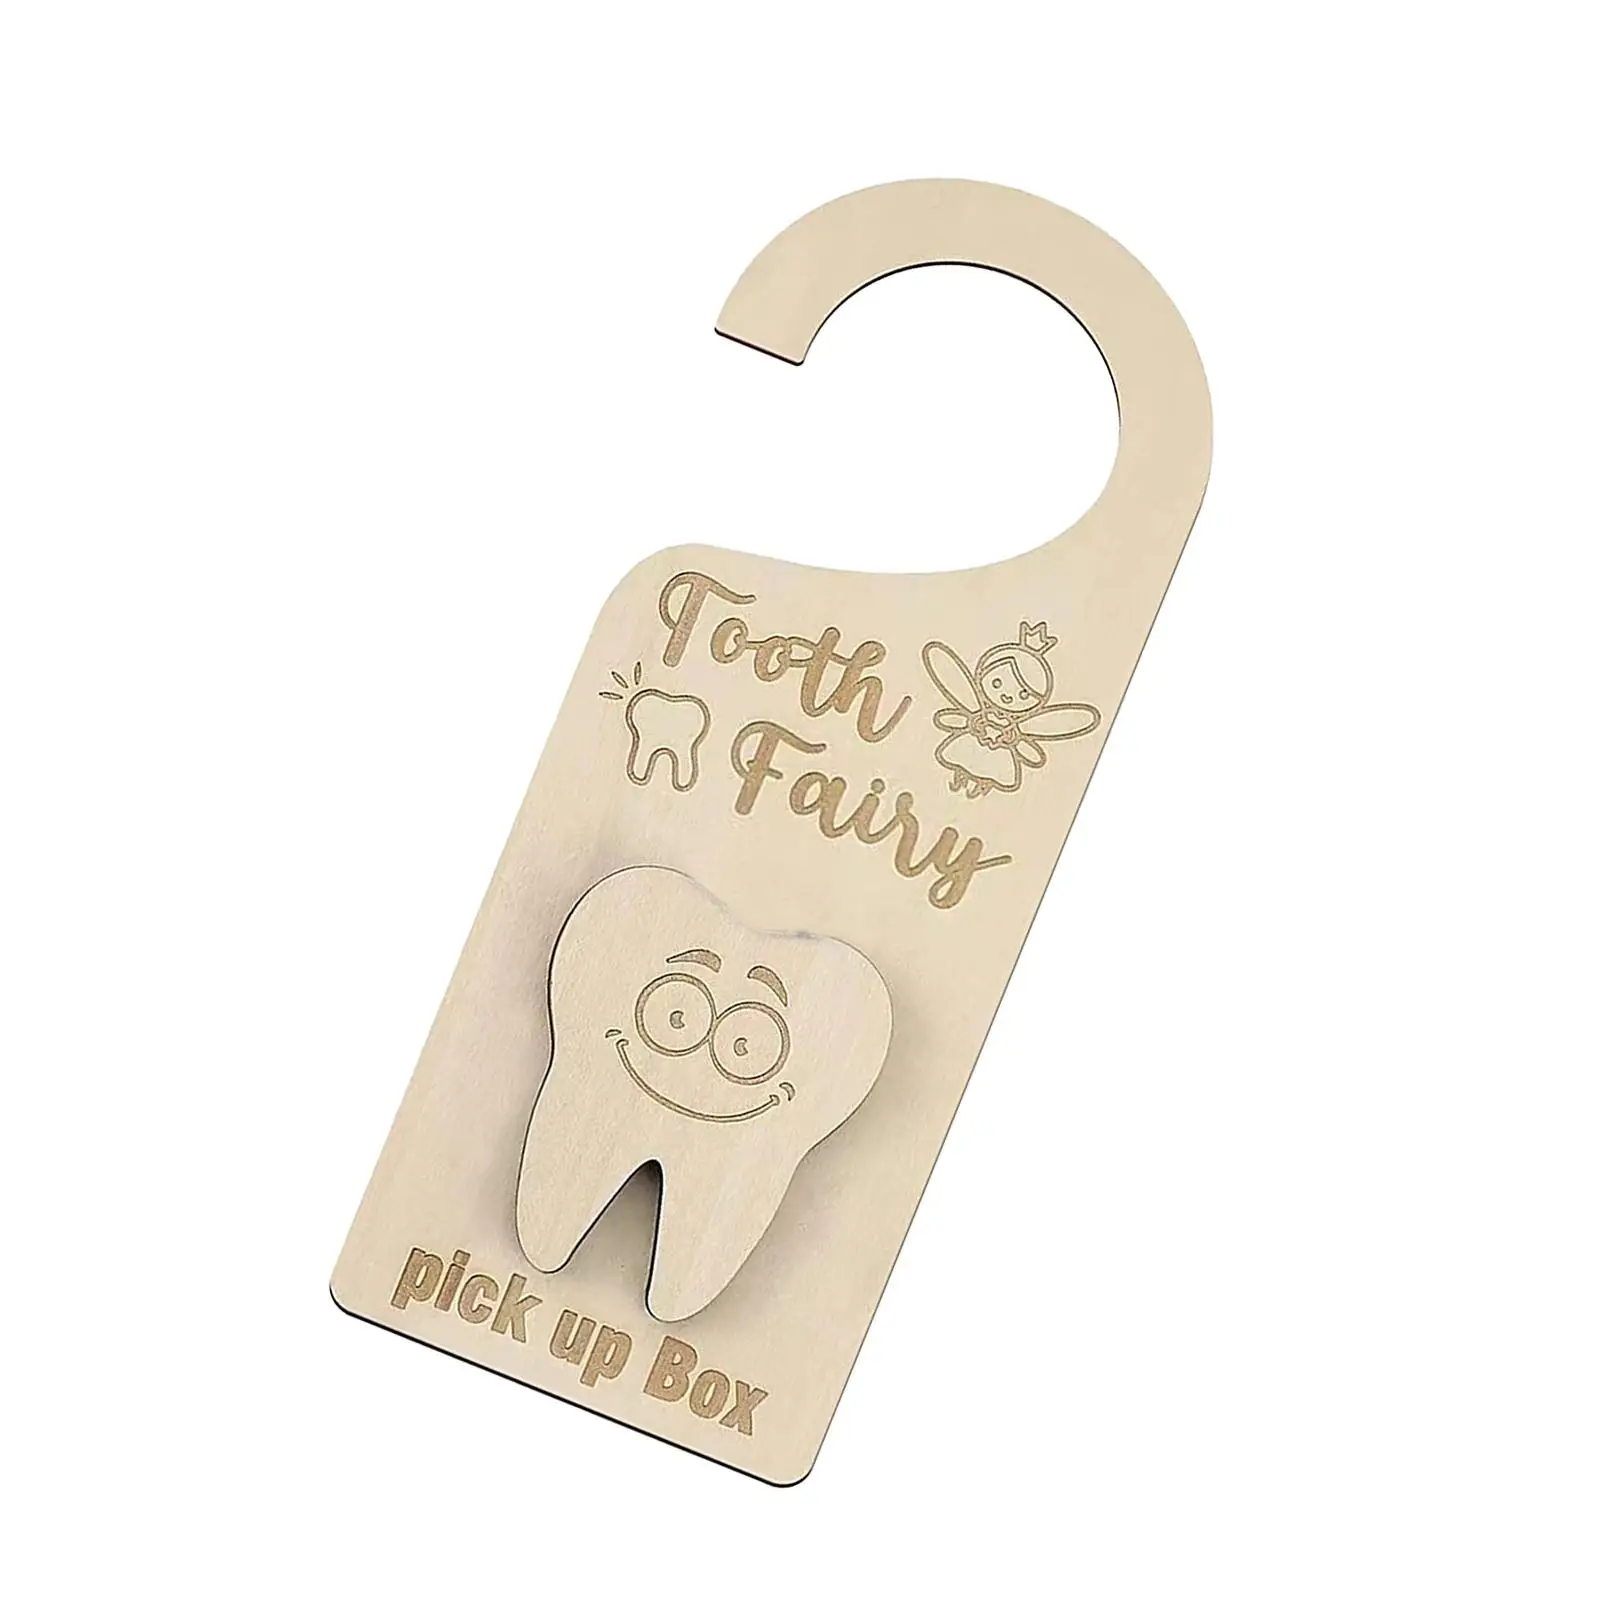 Wooden Tooth Fairy Pick up Box Keepsake Organizer Case Tooth Fairy Door Hanger for Lost Teeth Kids Boys